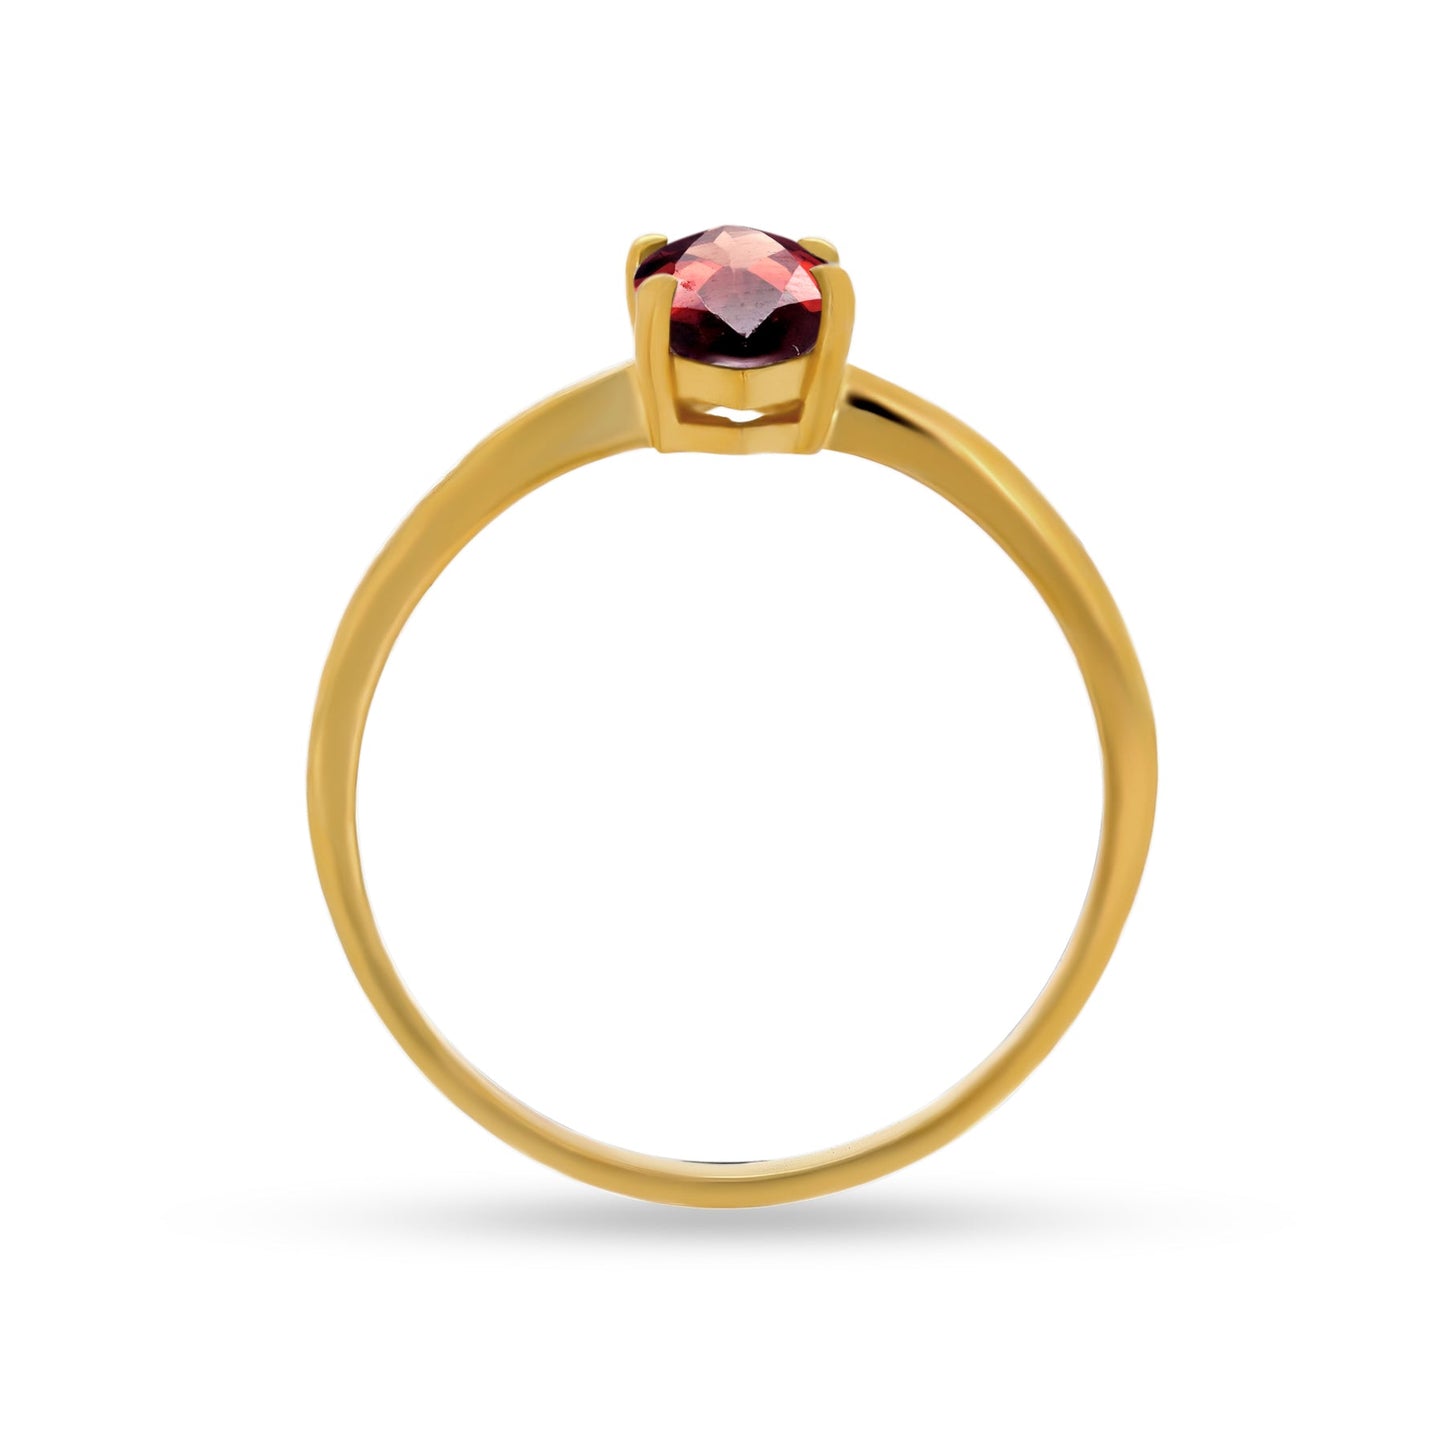 18k Gold Vermeil Faceted Garnet Ring